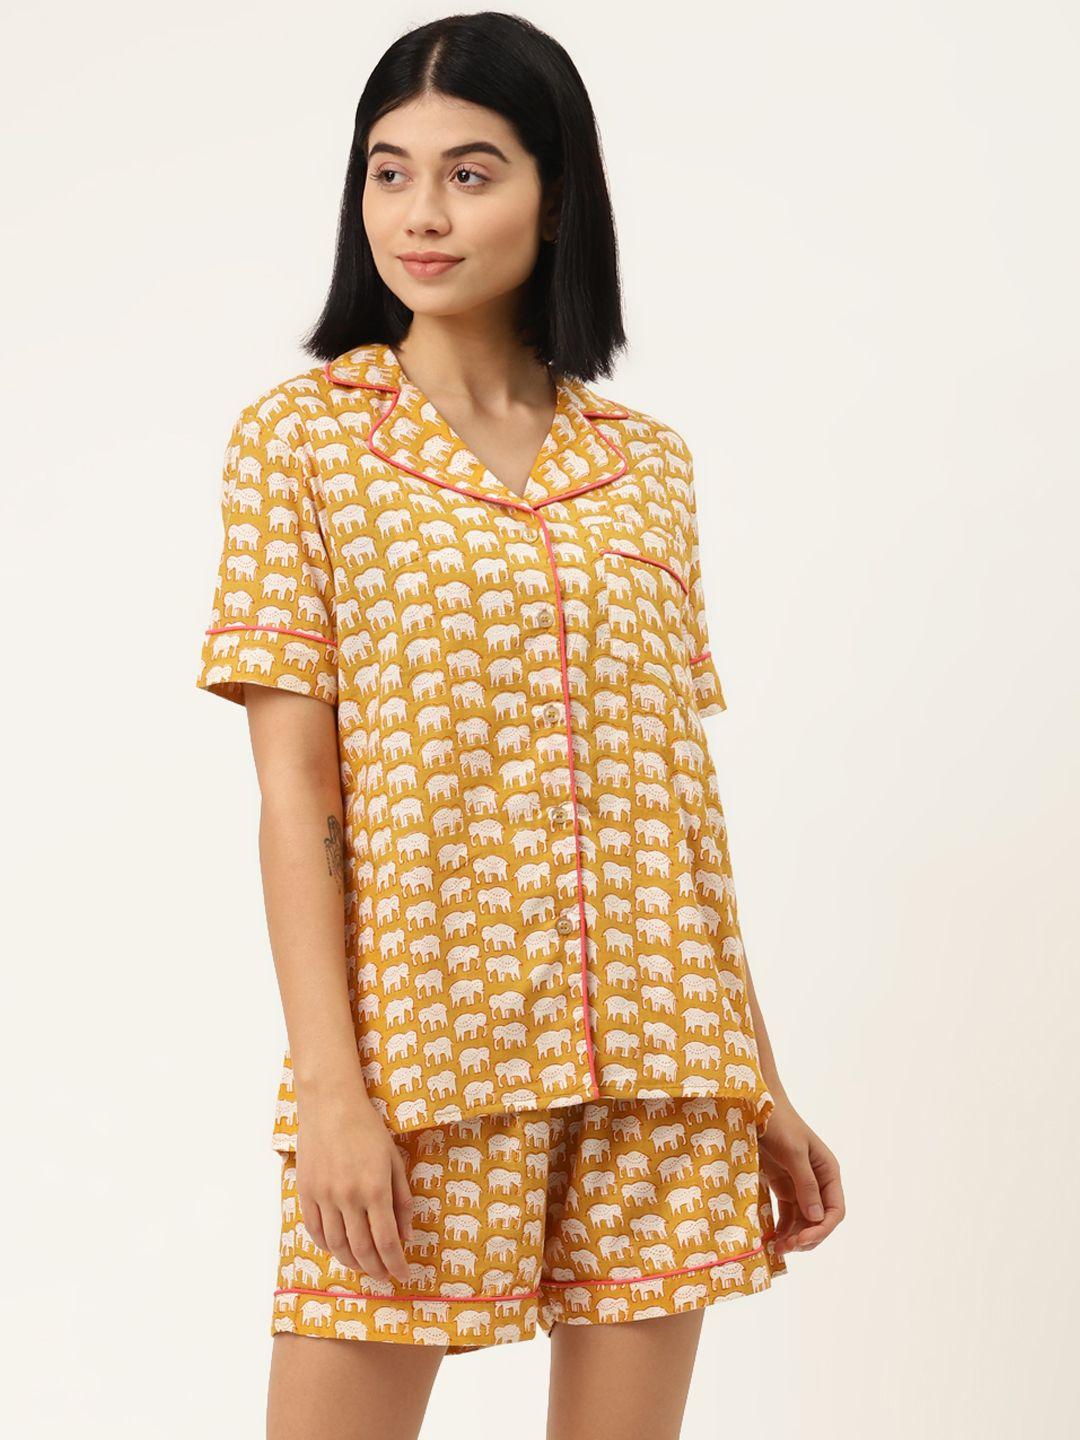 MABISH by Sonal Jain Women Mustard Yellow & White Ethnic Motifs Print Cotton Night suit